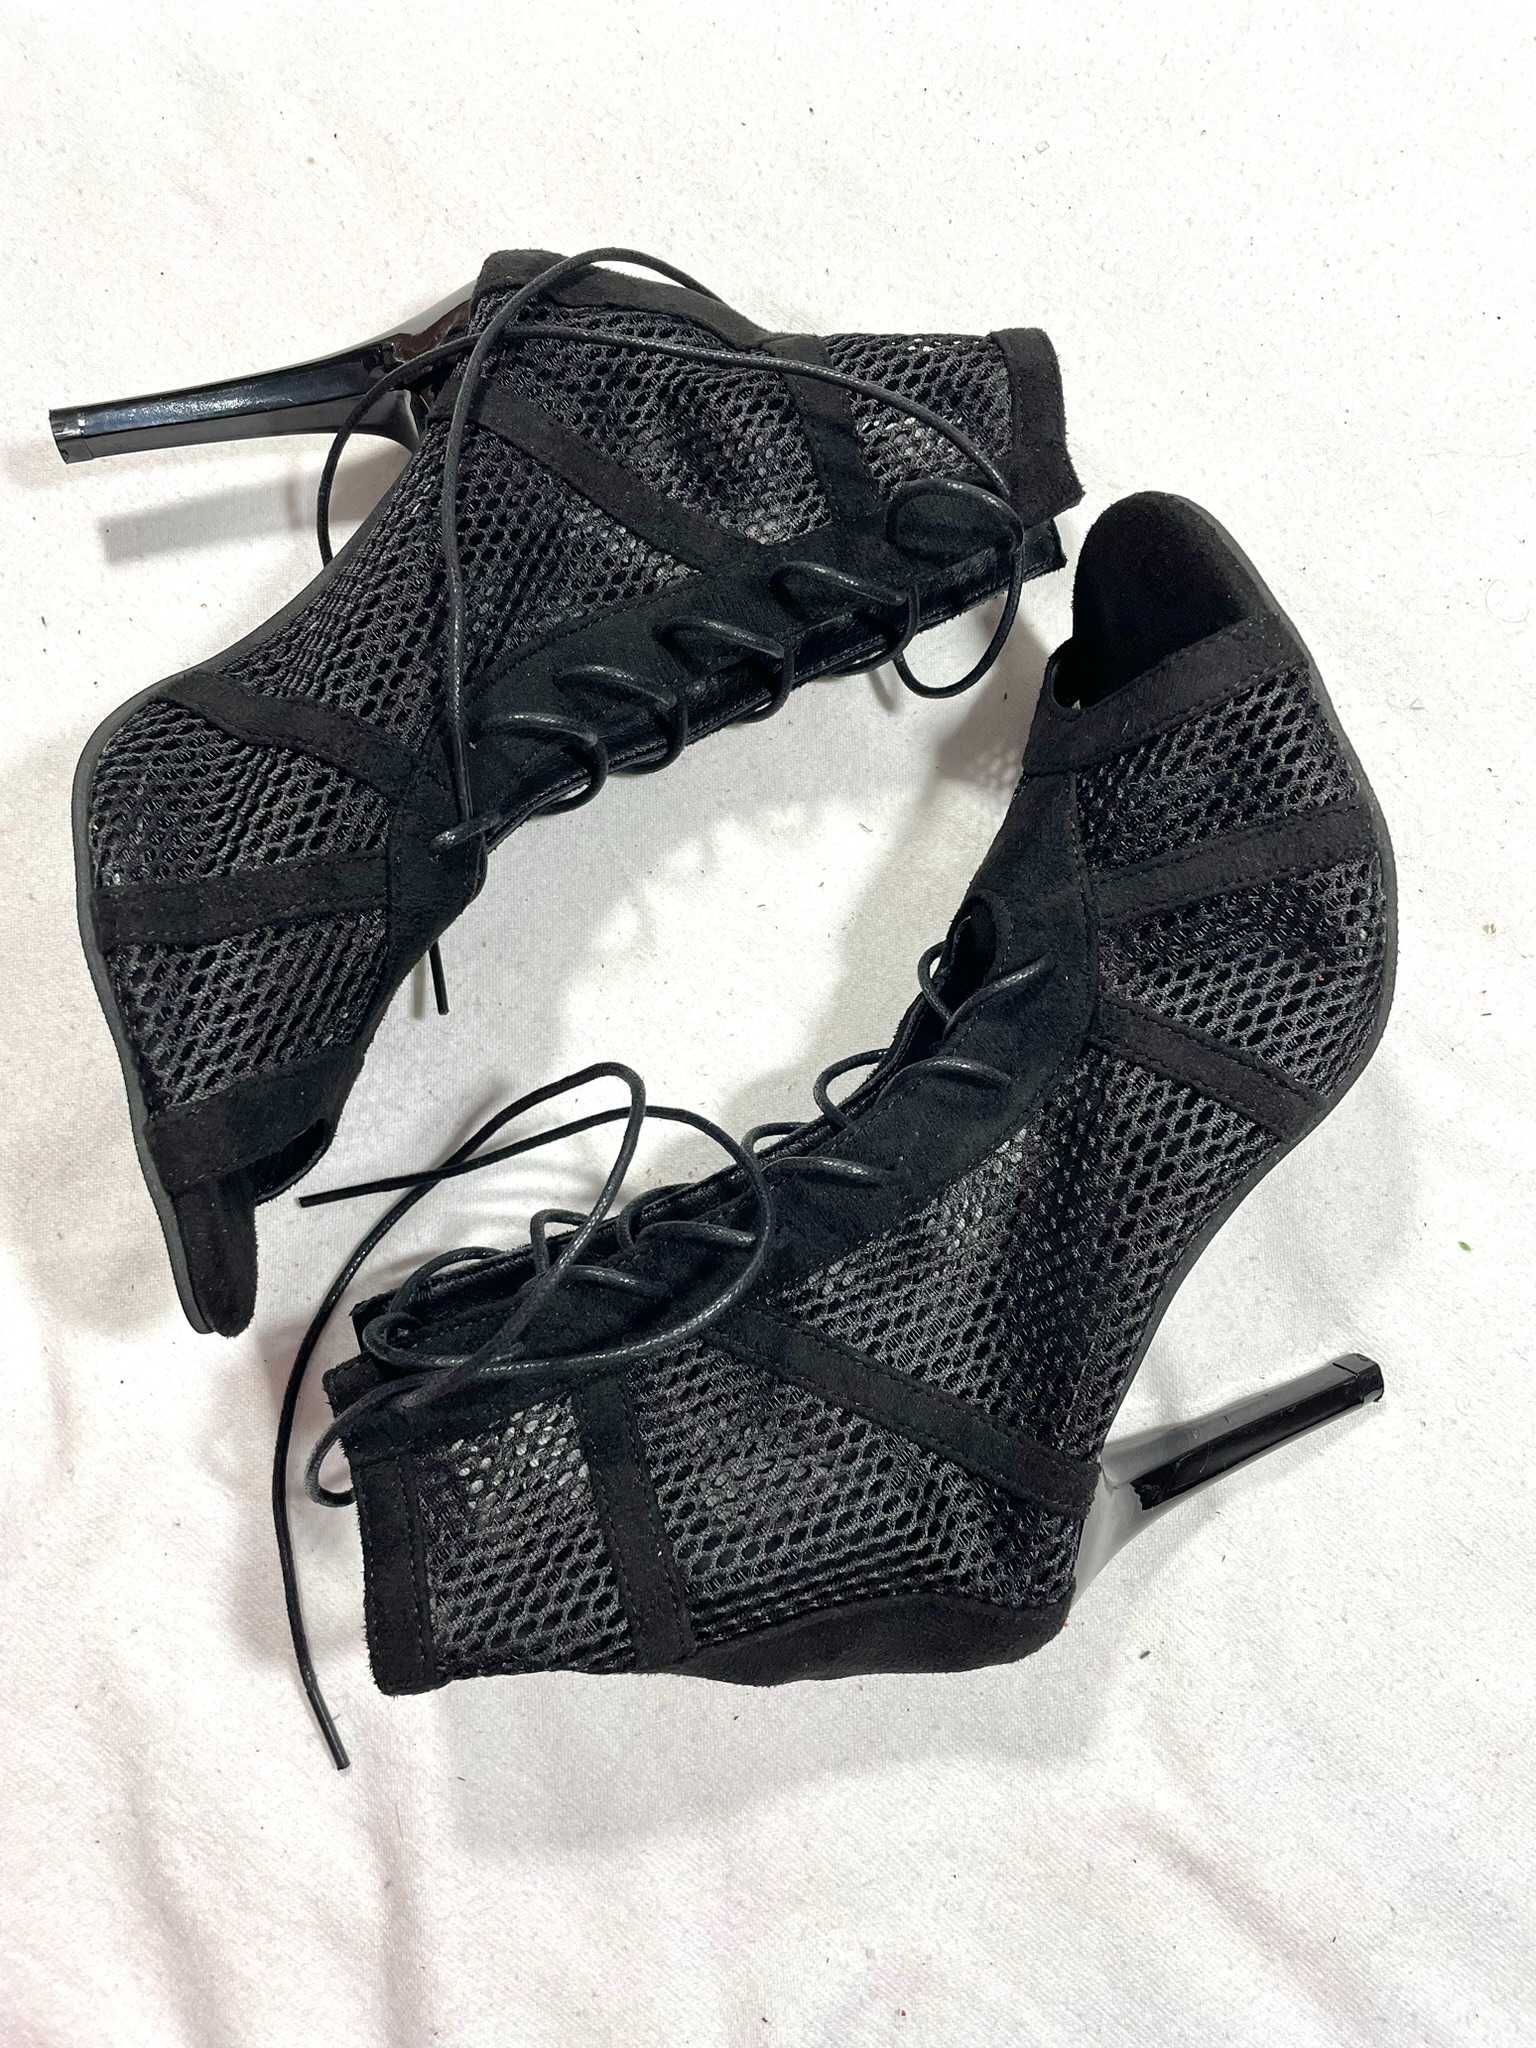 Nowe buty do tańca High heels 37